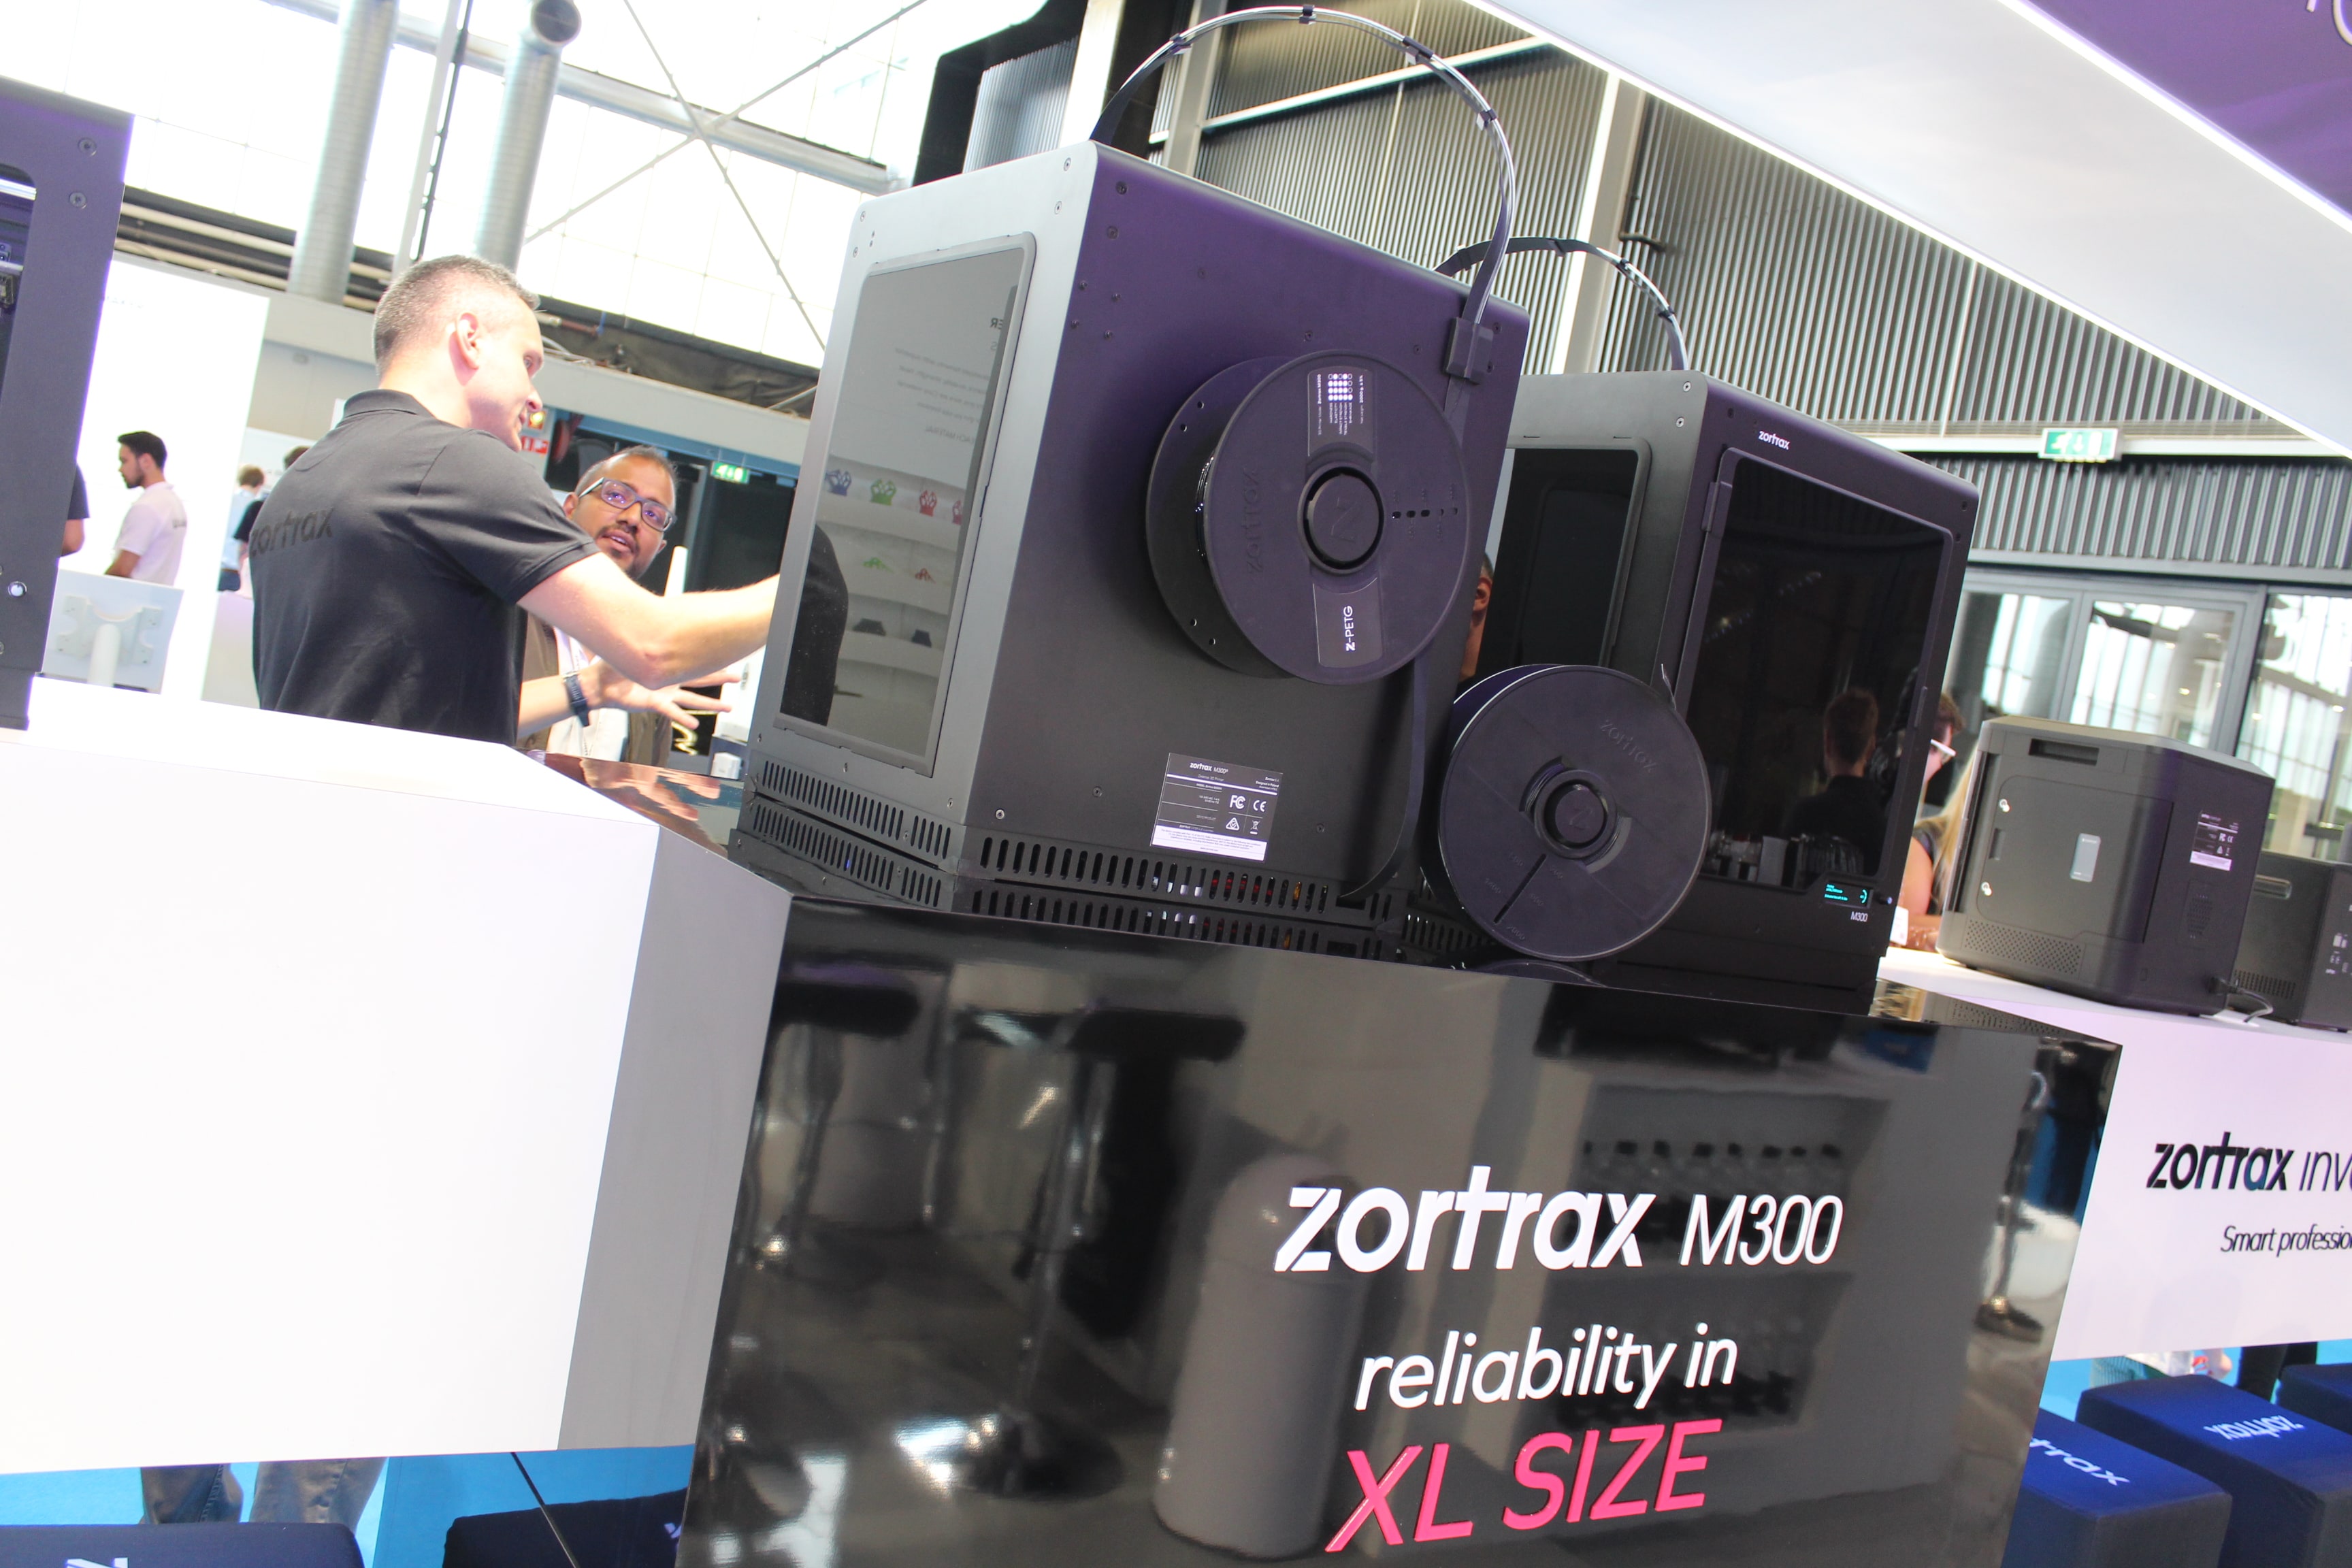 Zortrax M300 printer on a platform